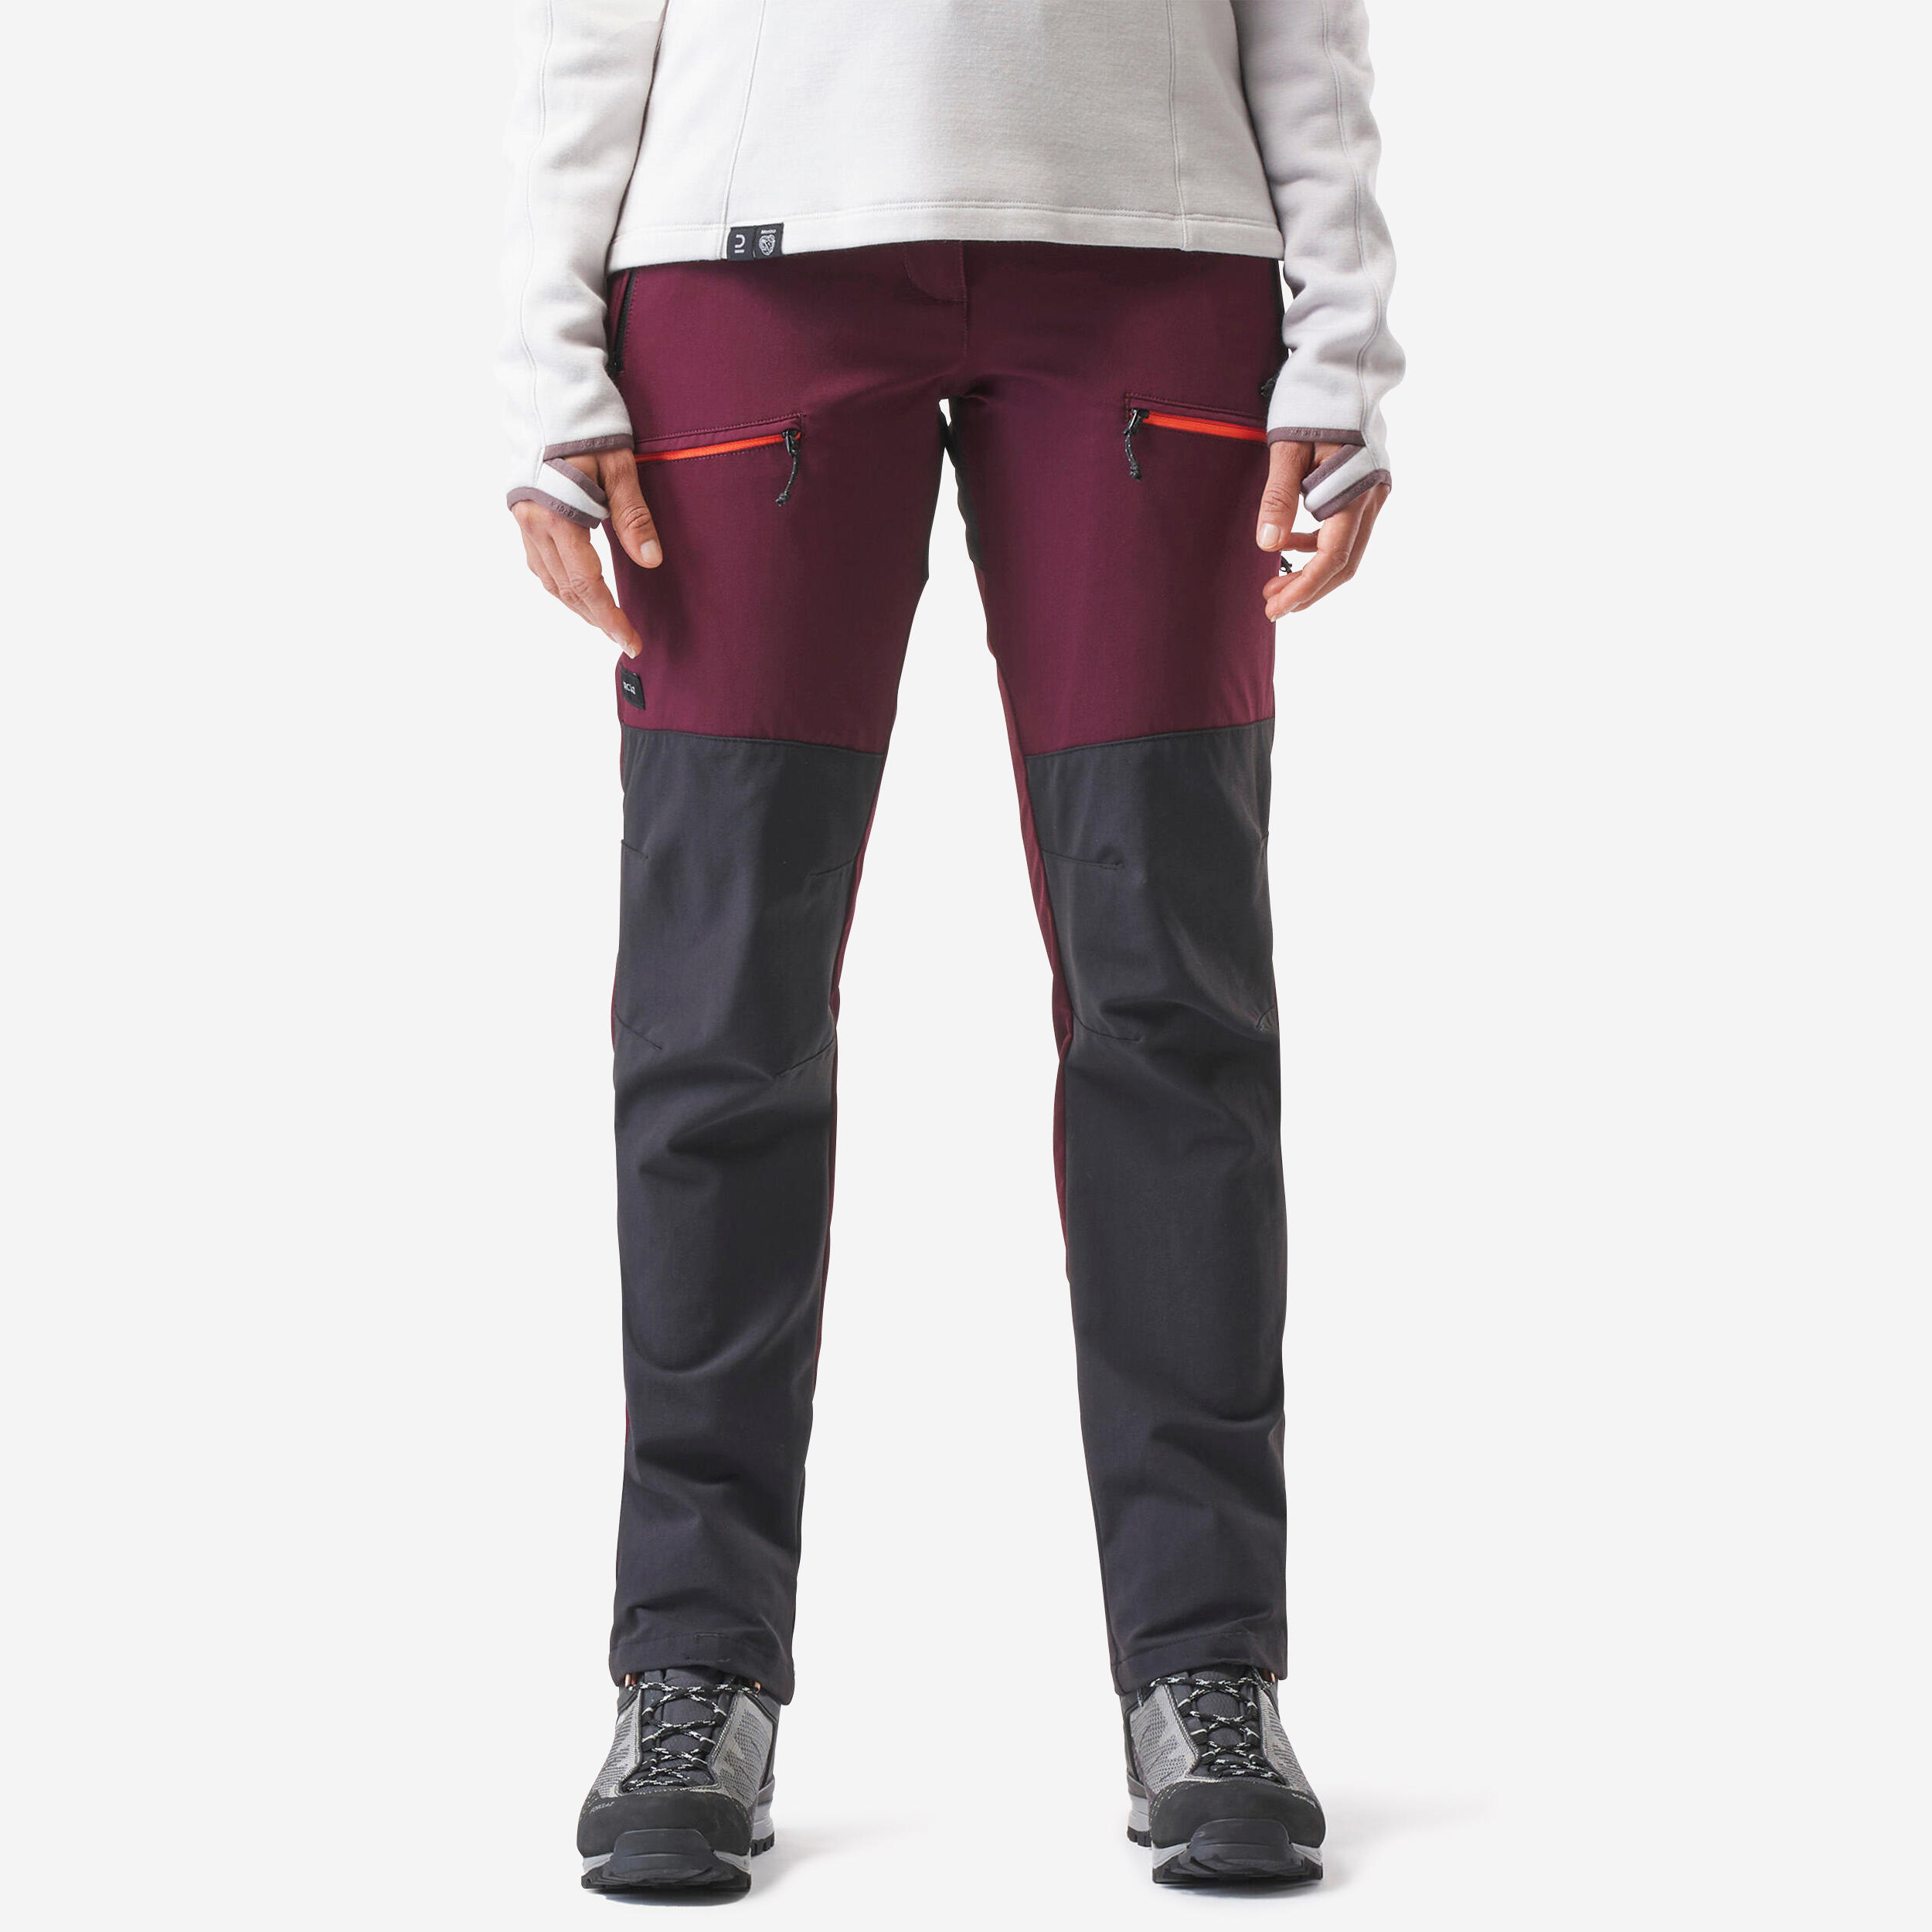 FORCLAZ Women's Mountain Trekking Water-Repellent Trousers MT900 - maroon